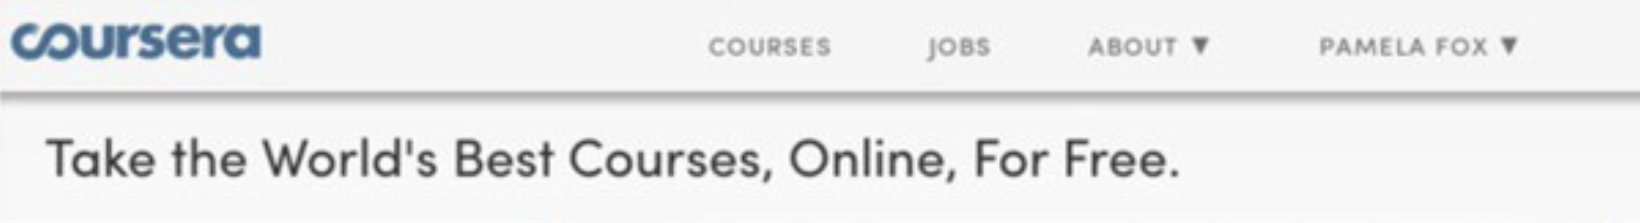 Screenshot of Coursera website from initial launch